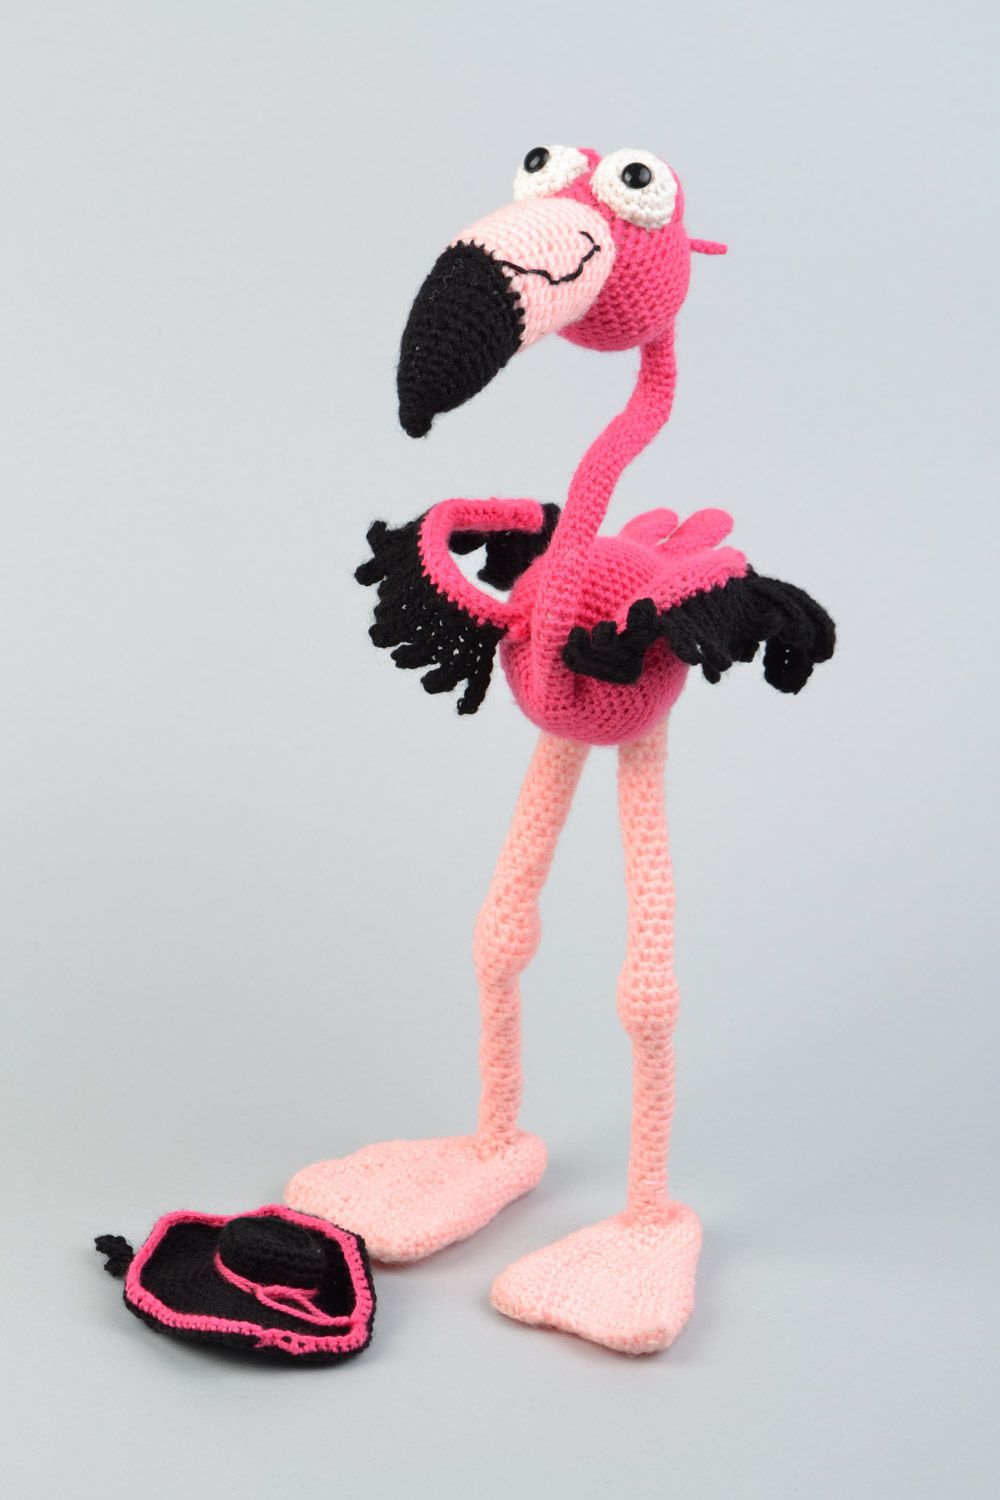 Handmade soft crochet toy pink flamingo on wire frame photo 5